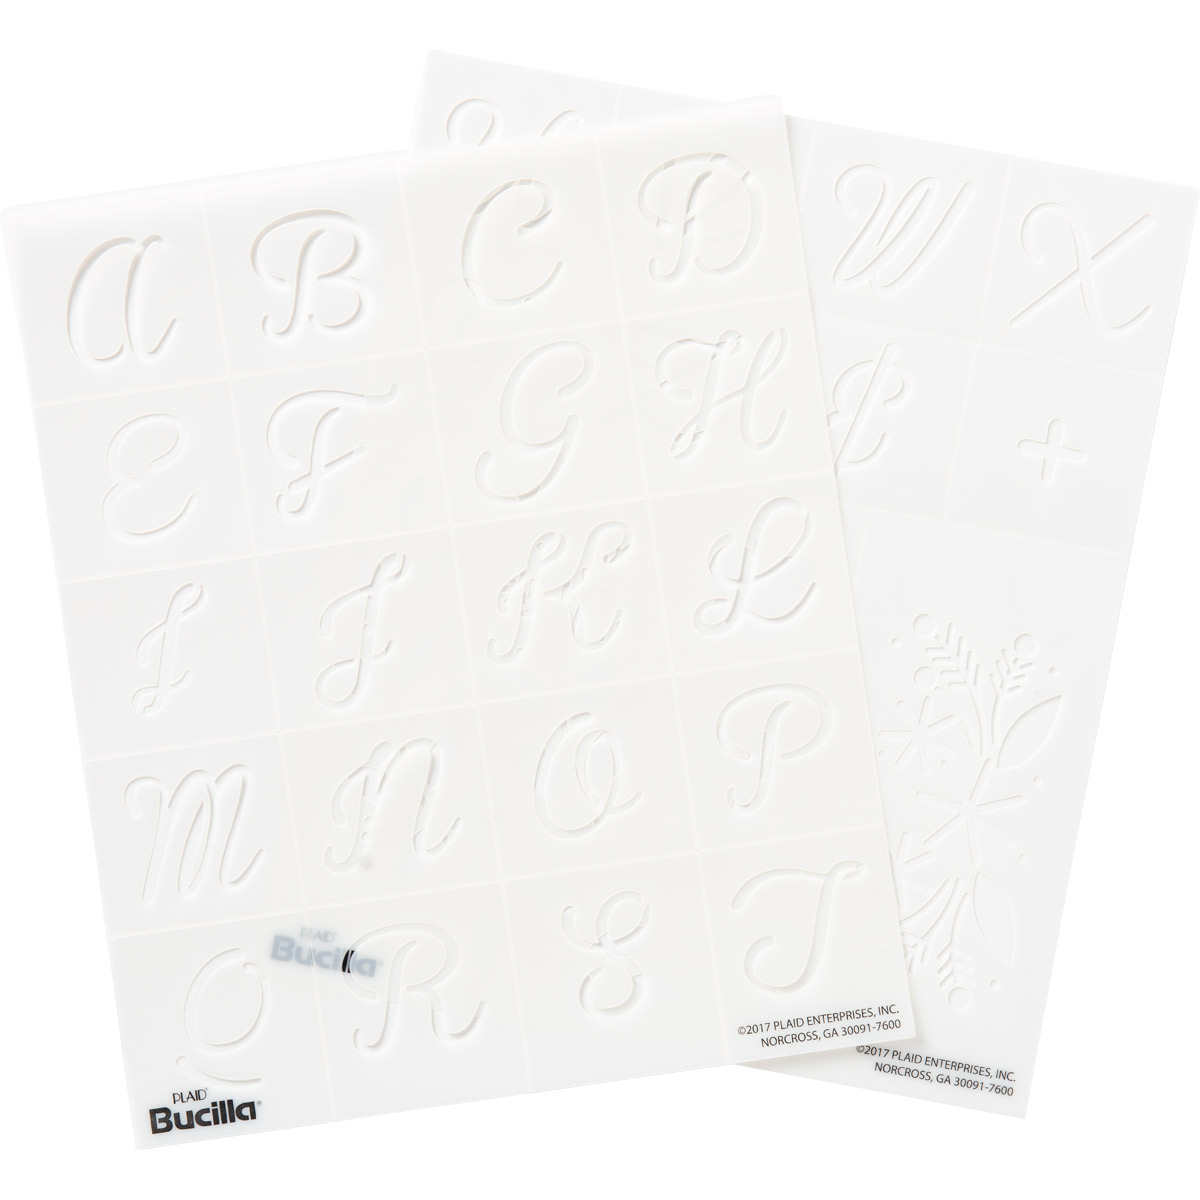 Bucilla ® Lettering and Monogramming Template Kit - Alphabet Script - 49066E